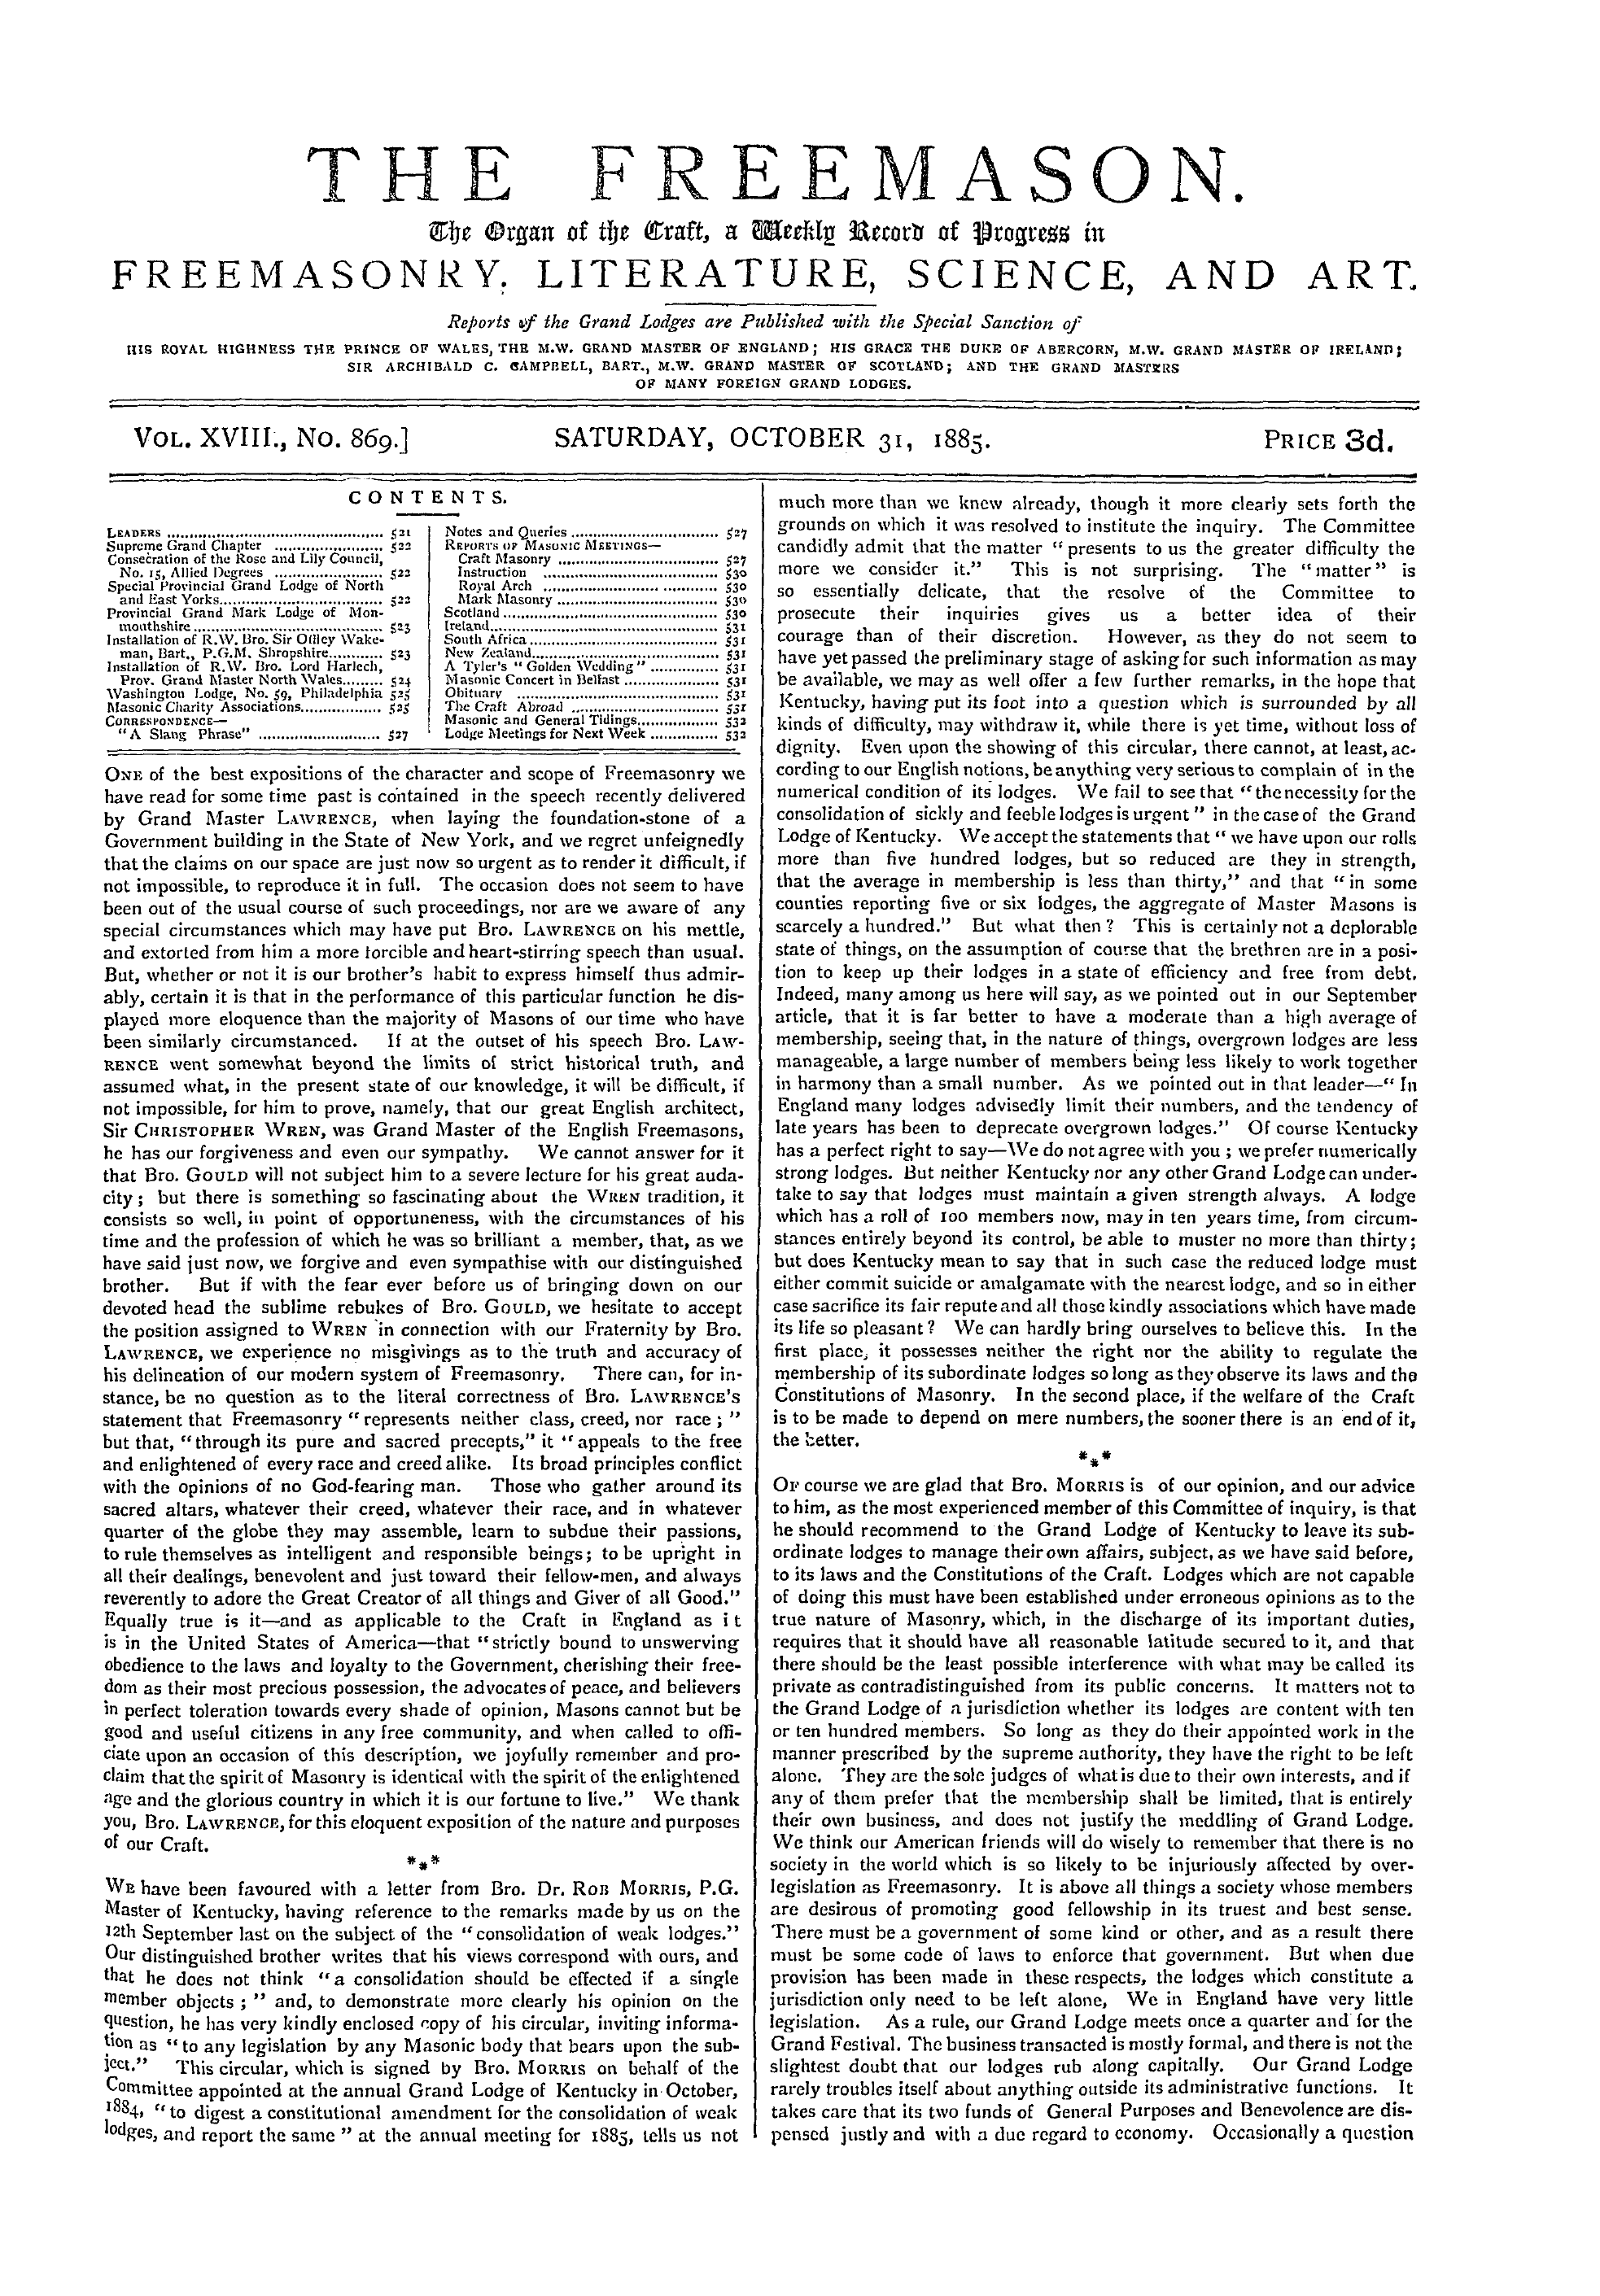 The Freemason: 1885-10-31 - Contents.